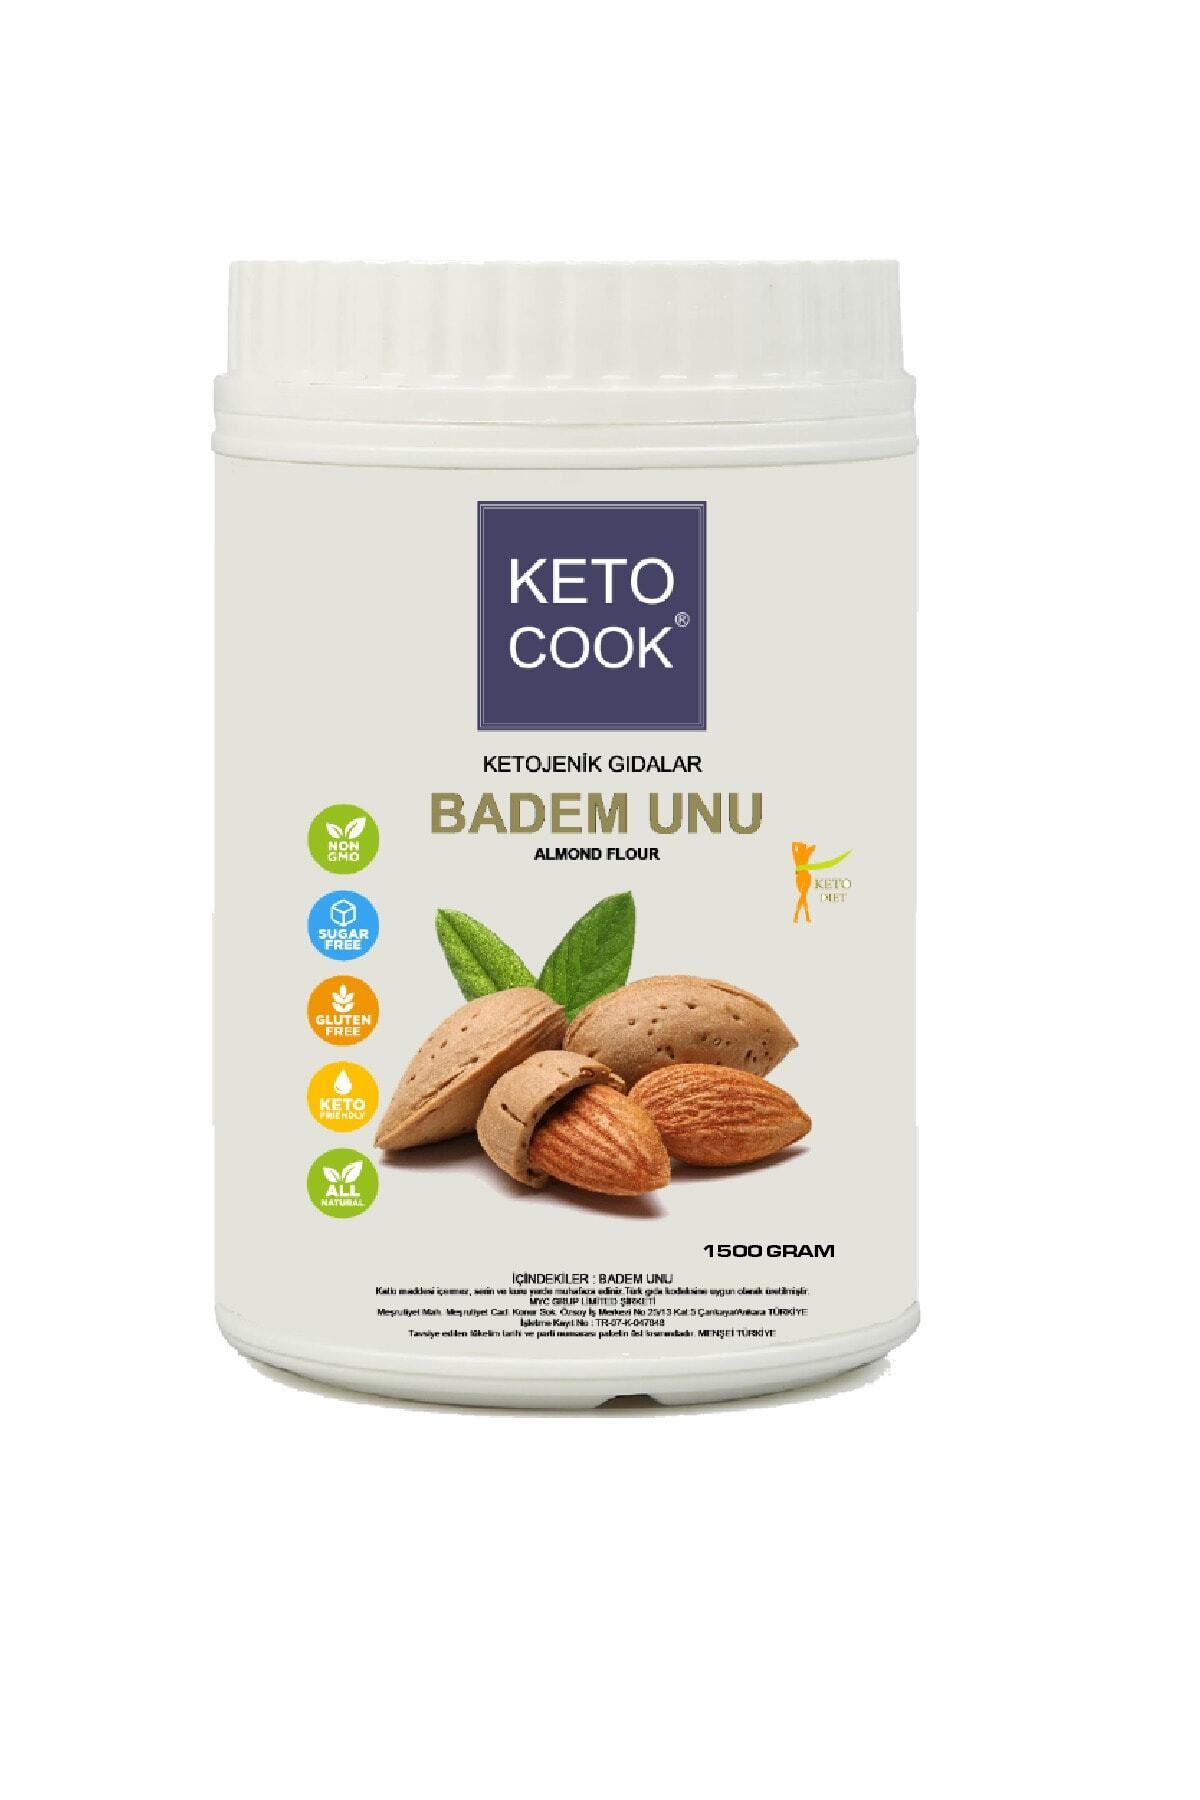 KetoCook Ketojenik Glutensiz Badem Unu ( Almond Flour ) 1500 gram